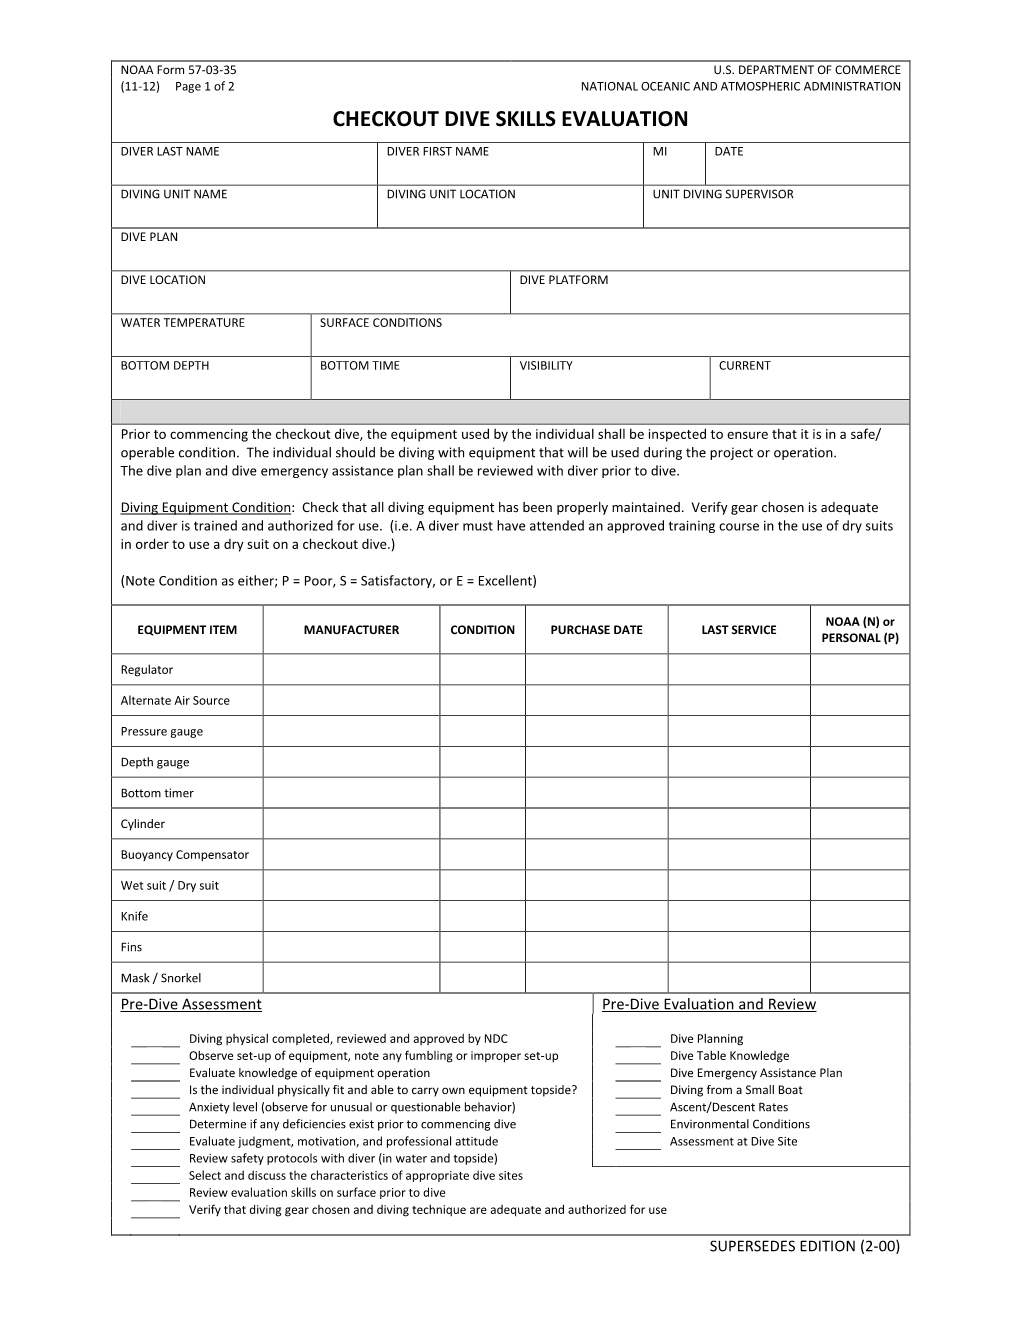 NOAA Form 57-03-35 Checkout Dive Skills Evaluation